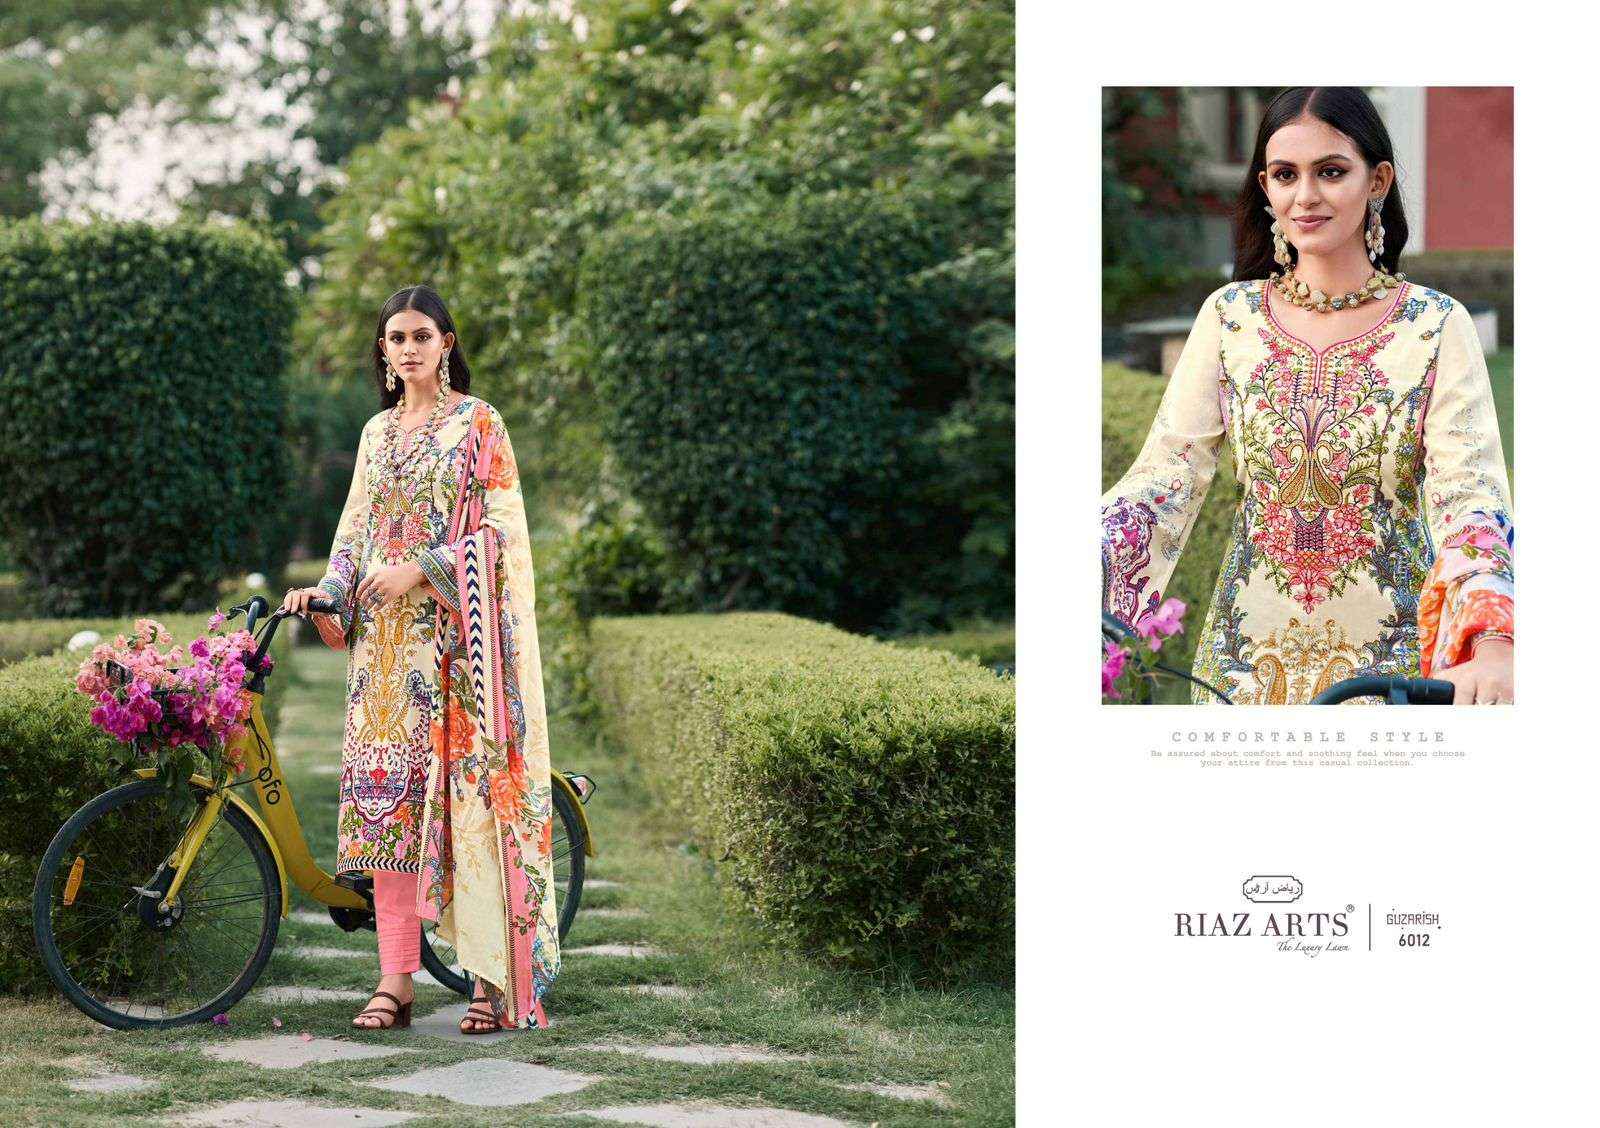 Riaz Arts Guzarish Karachi Lawn Dress Material 6 pcs Catalogue